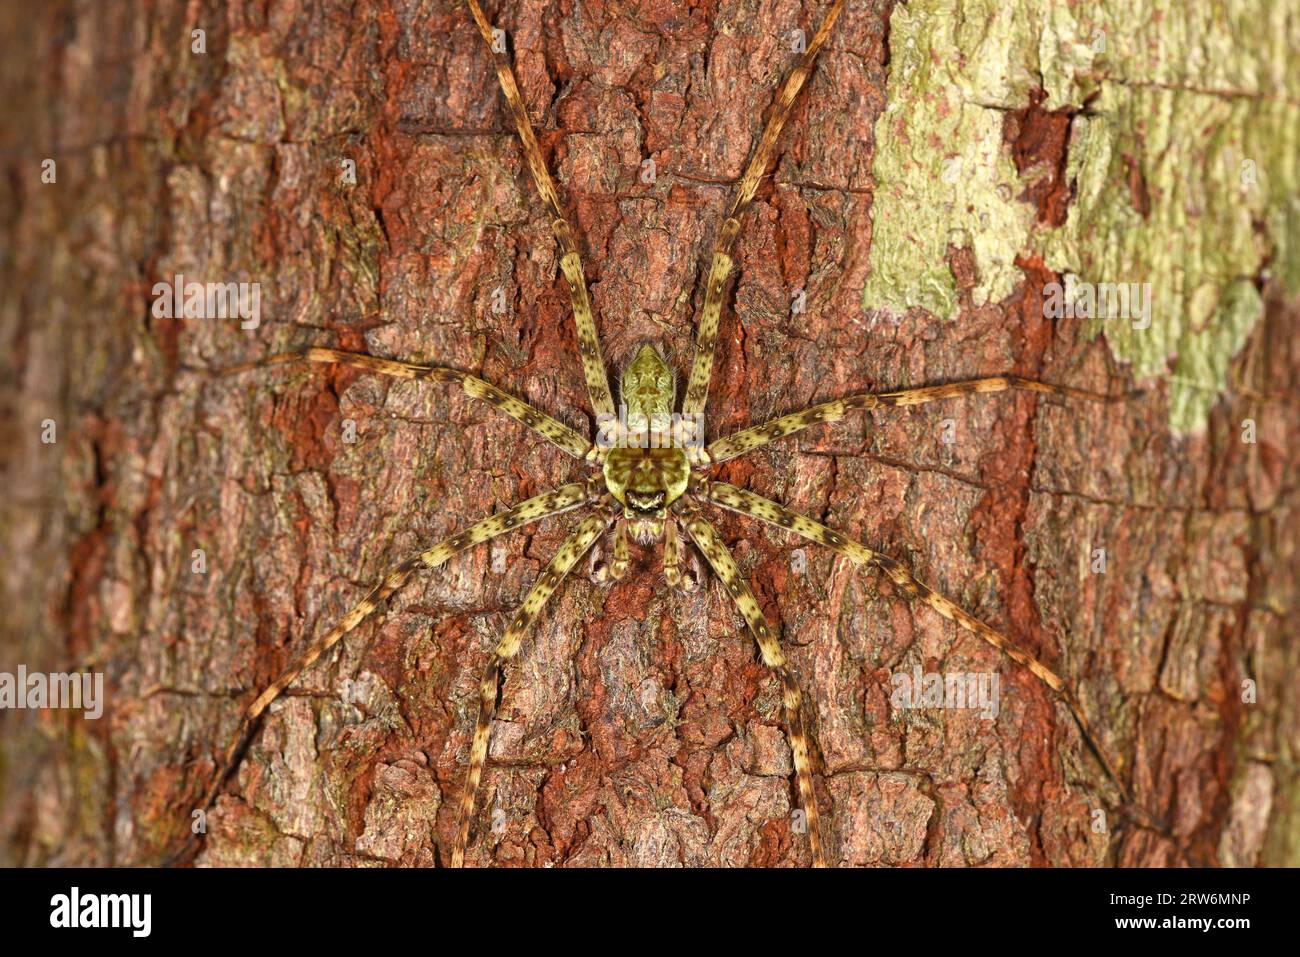 Lichen Huntsman Spider (Heteropoda boiei) resting on tree trunk, camouflaged, Danum, Sabah, Borneo, Malaysia Stock Photo